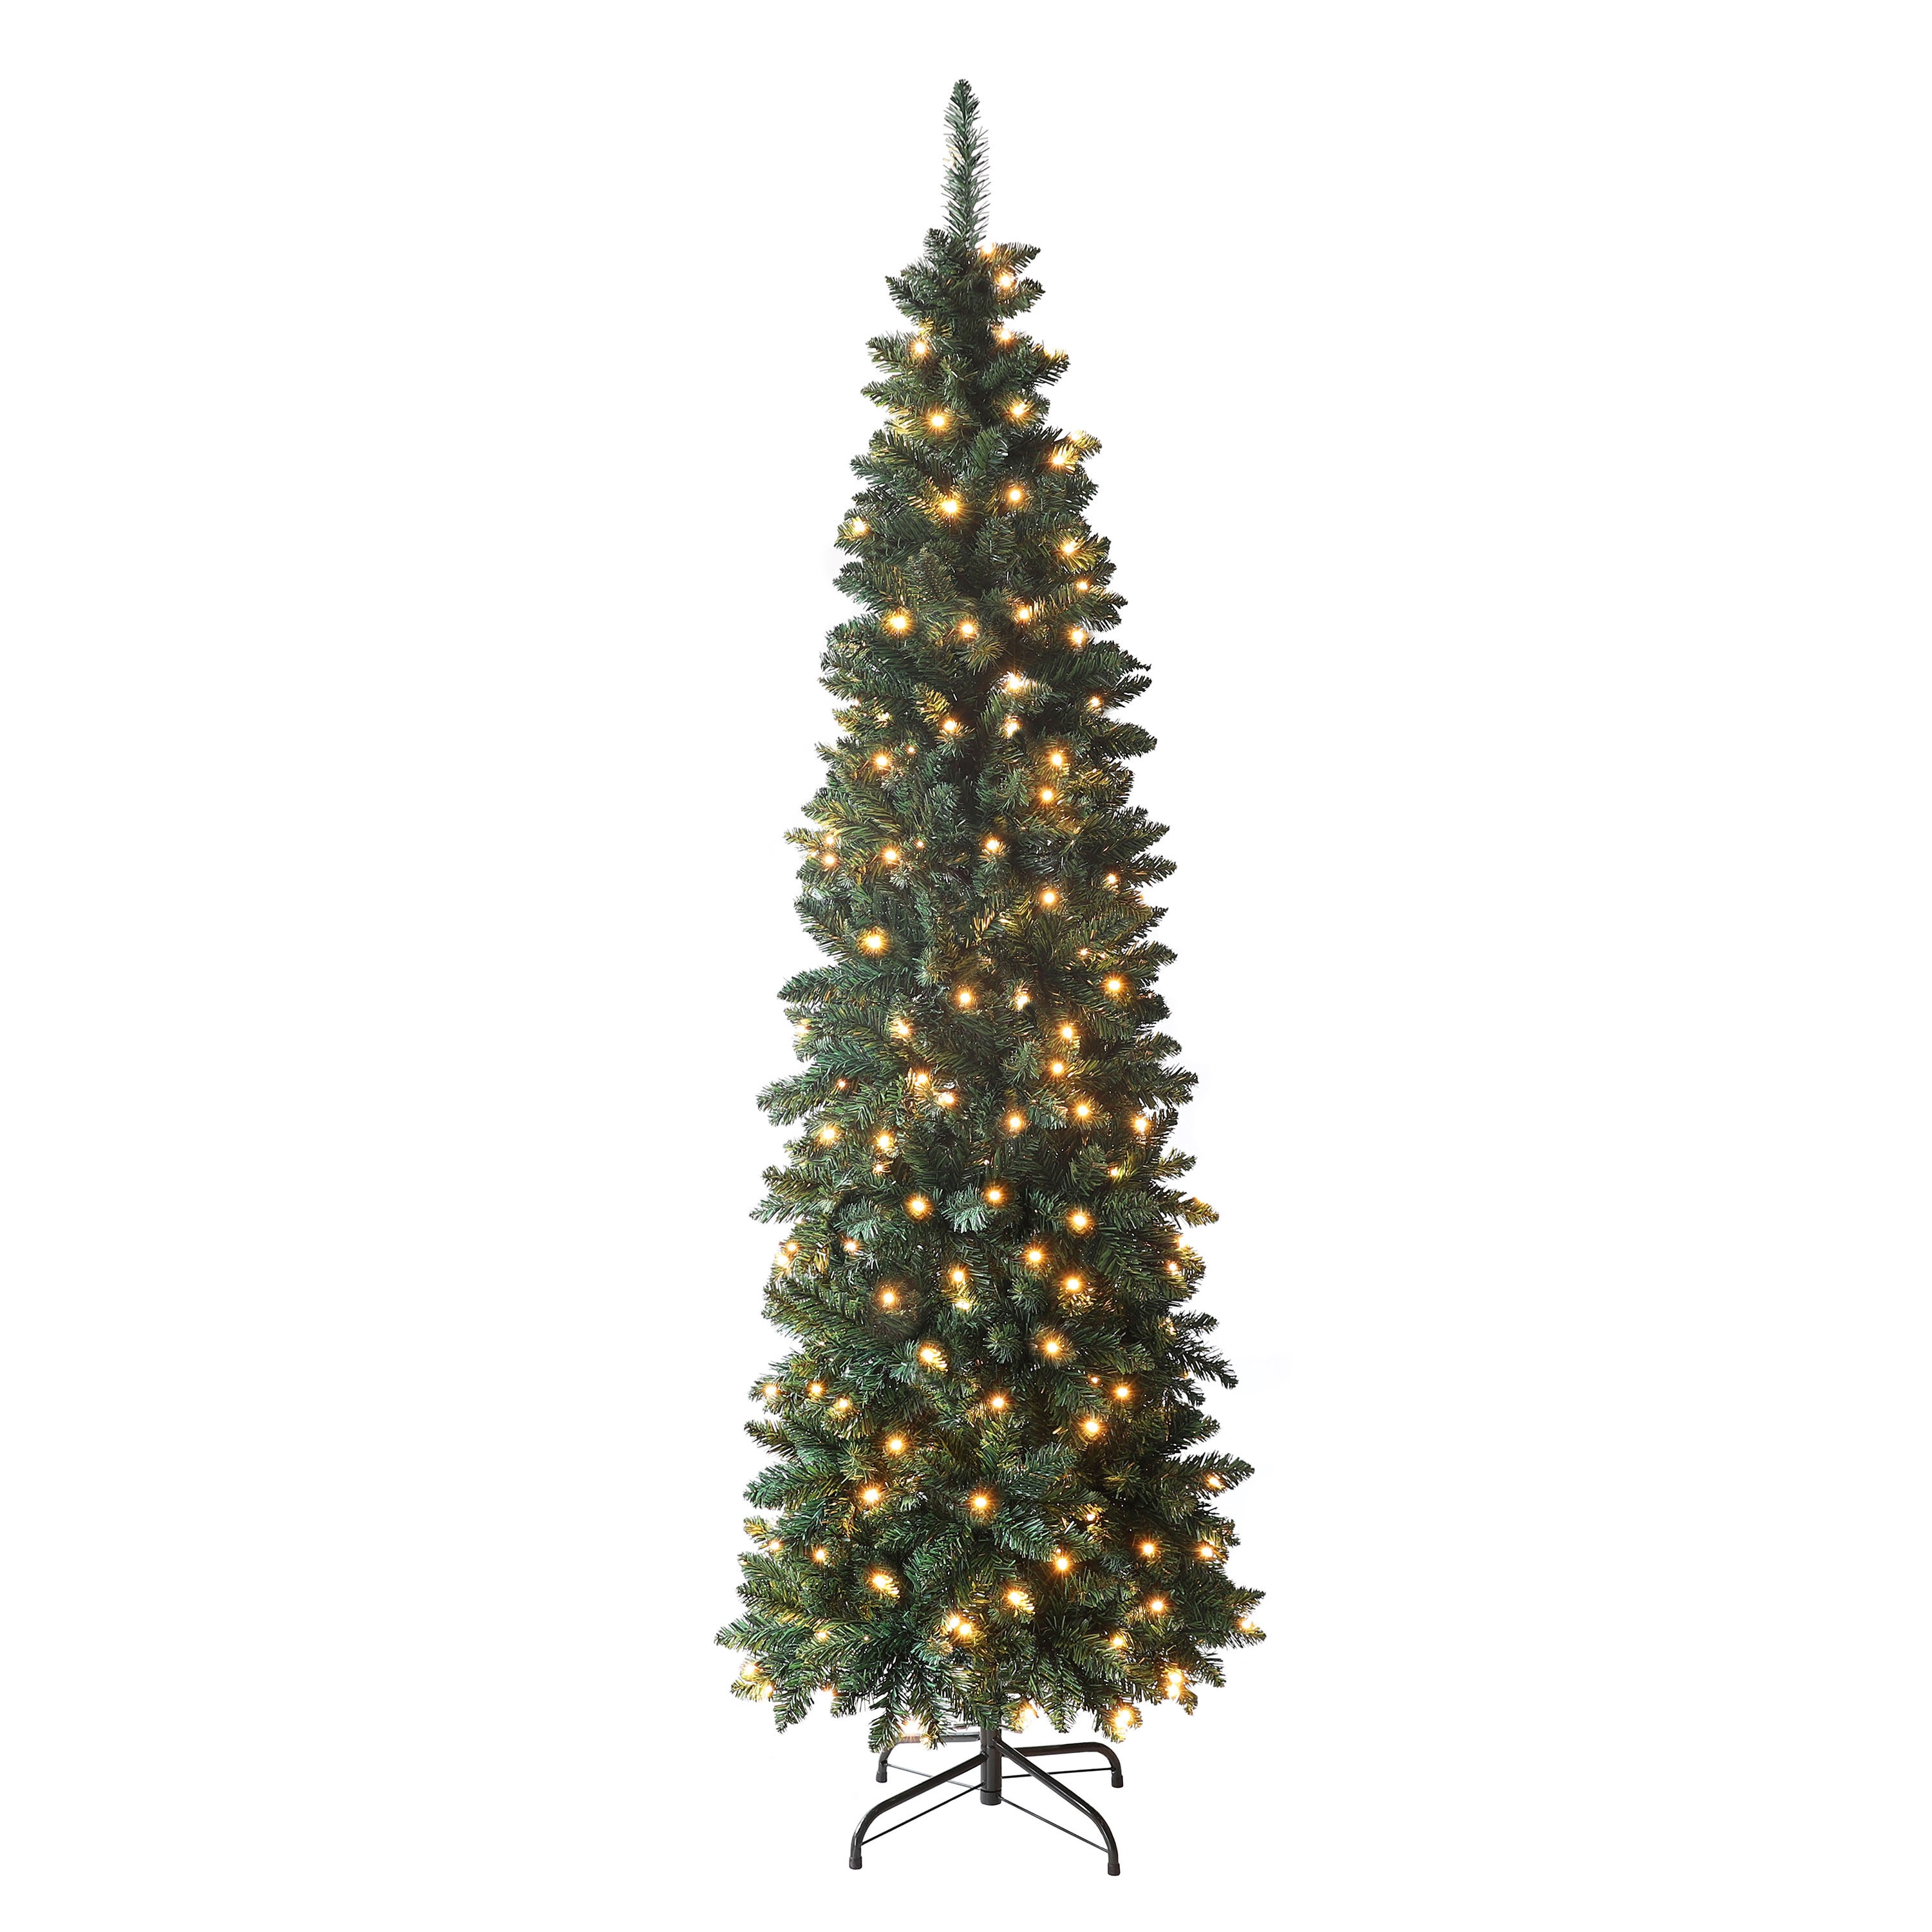 Pencil Christmas Trees at Lowes.com